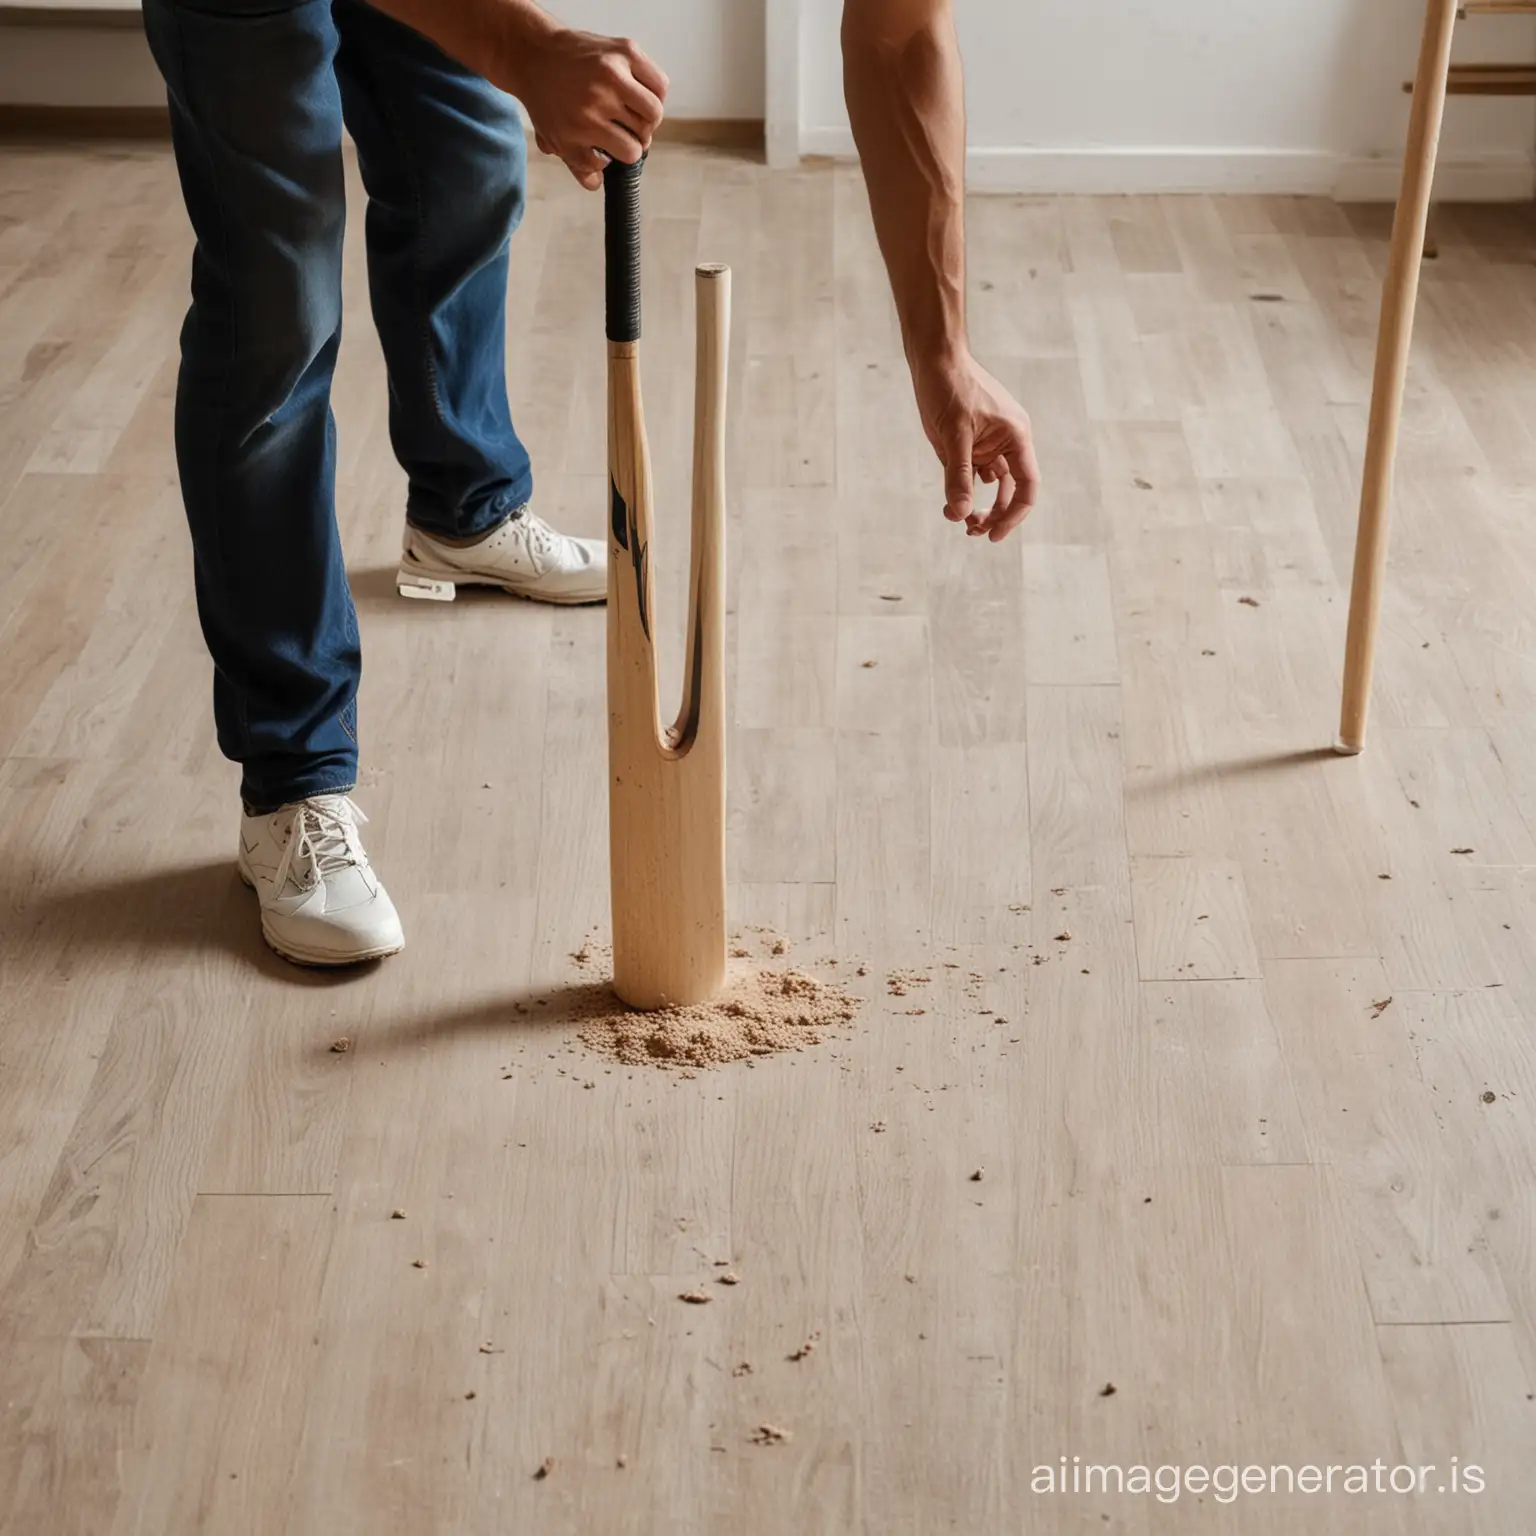 A man knock 
the cricket bat  in floor 

